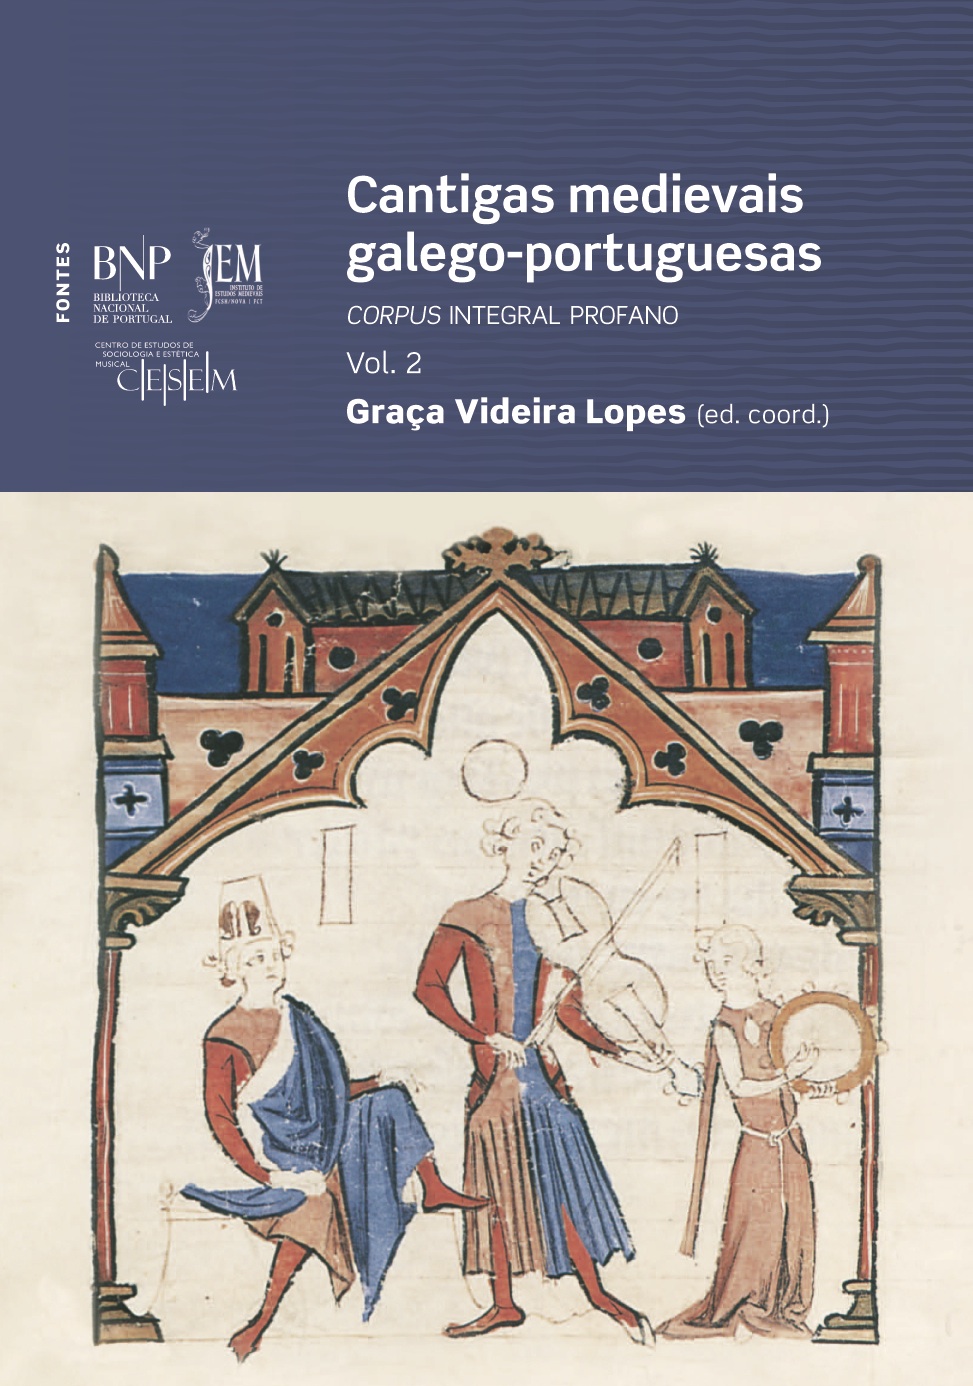 Cantigas medievais galego-portuguesas: corpus integral profano 2.º vol. - (Print on demand)